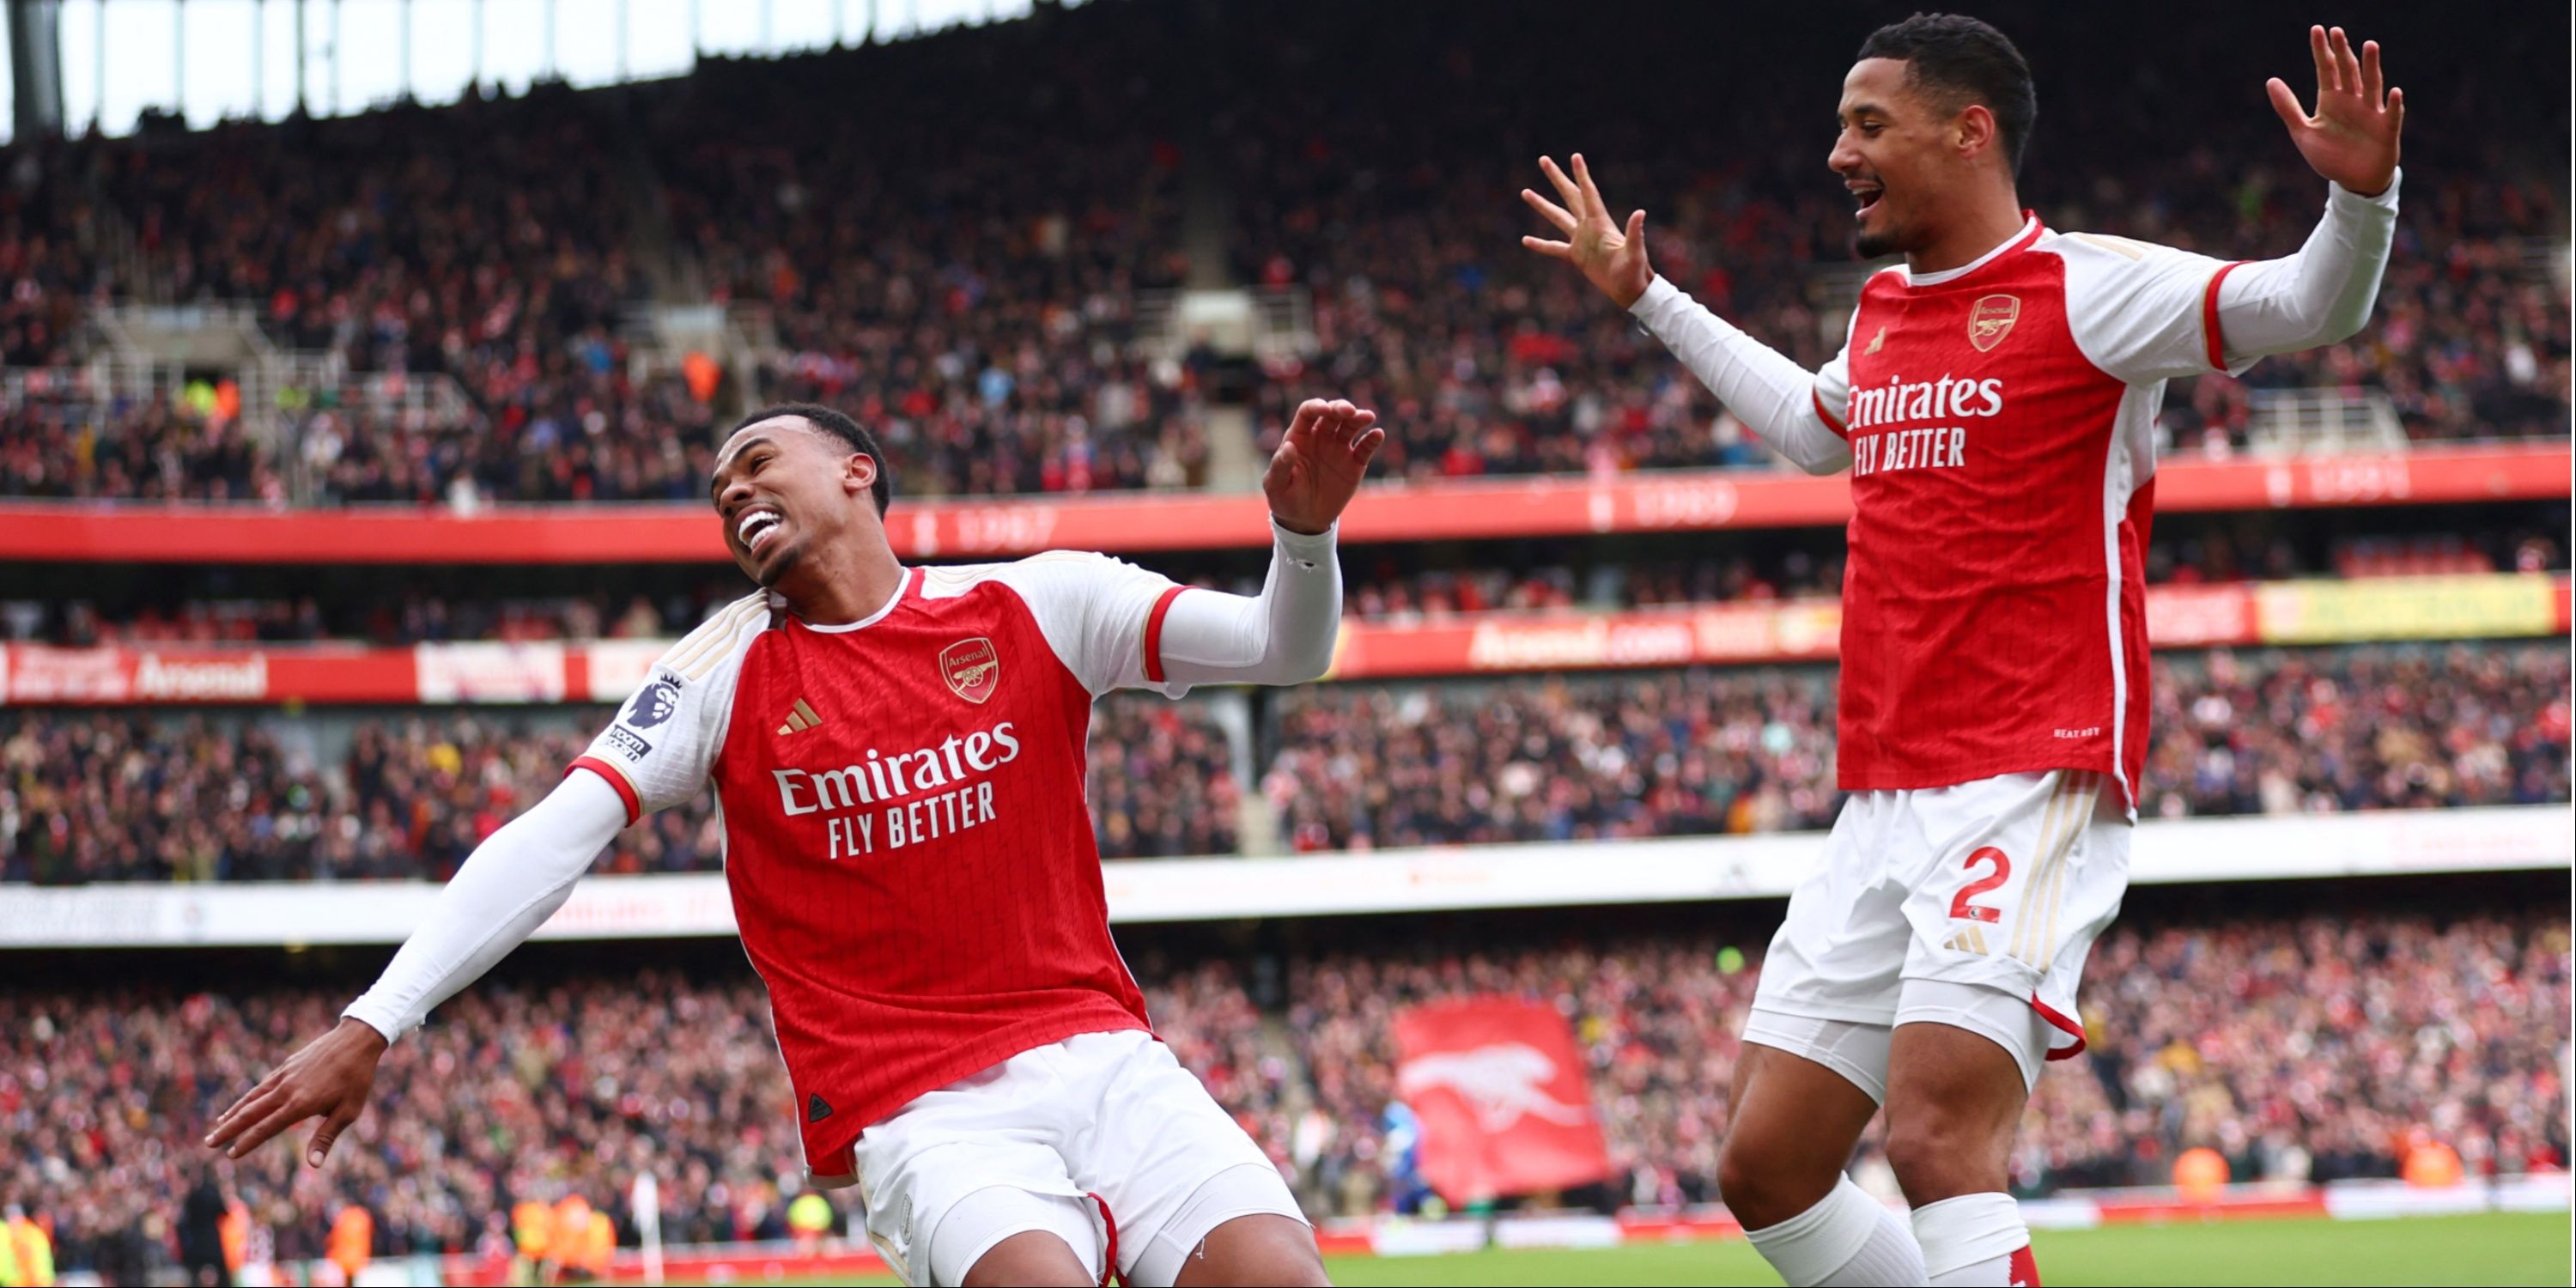 Arsenal's Gabriel and William Saliba celebrating a goal